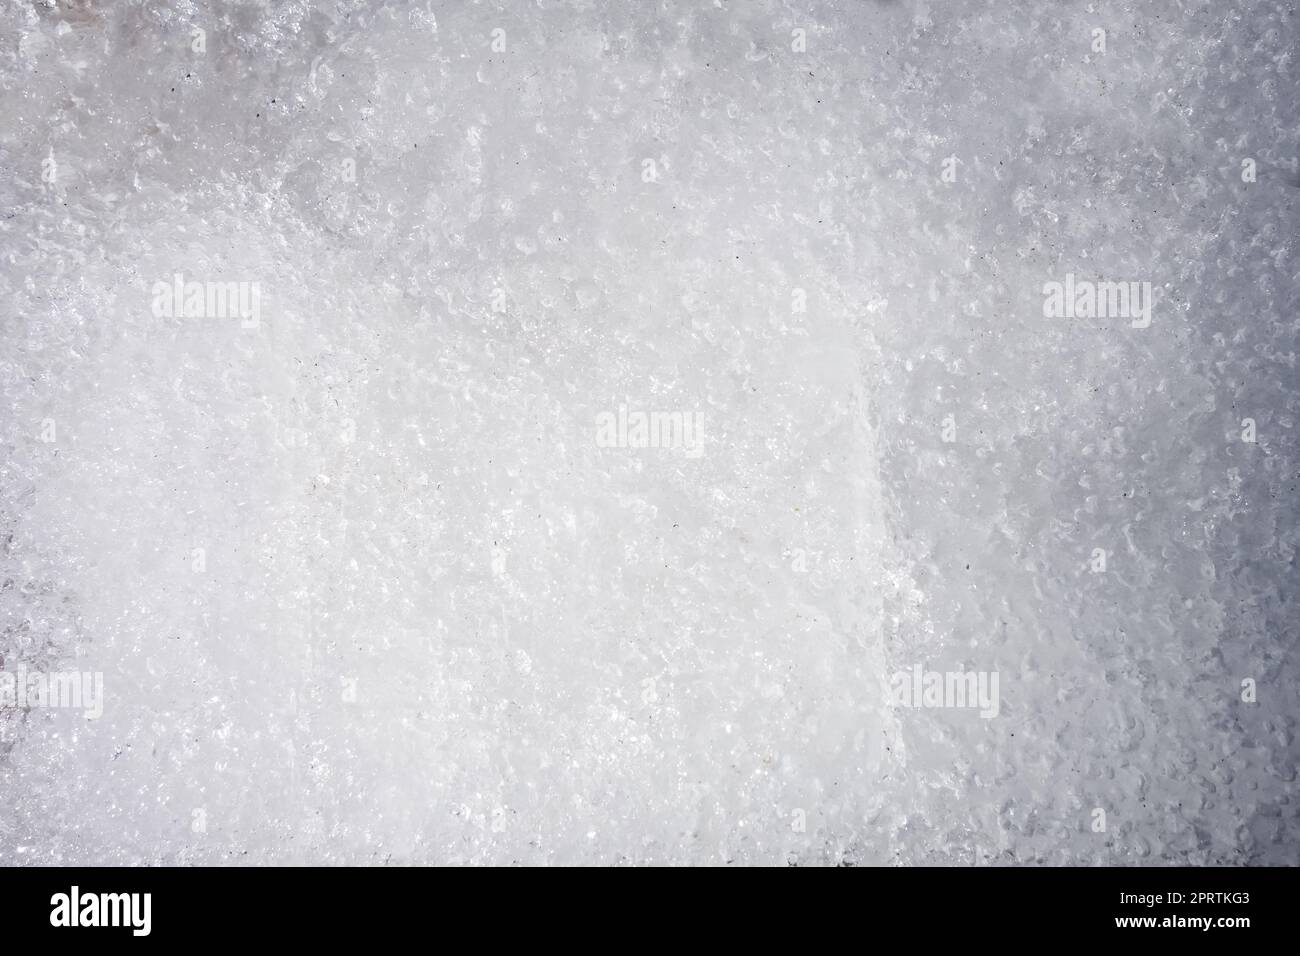 Snow texture background. Wallpaper Stock Photo